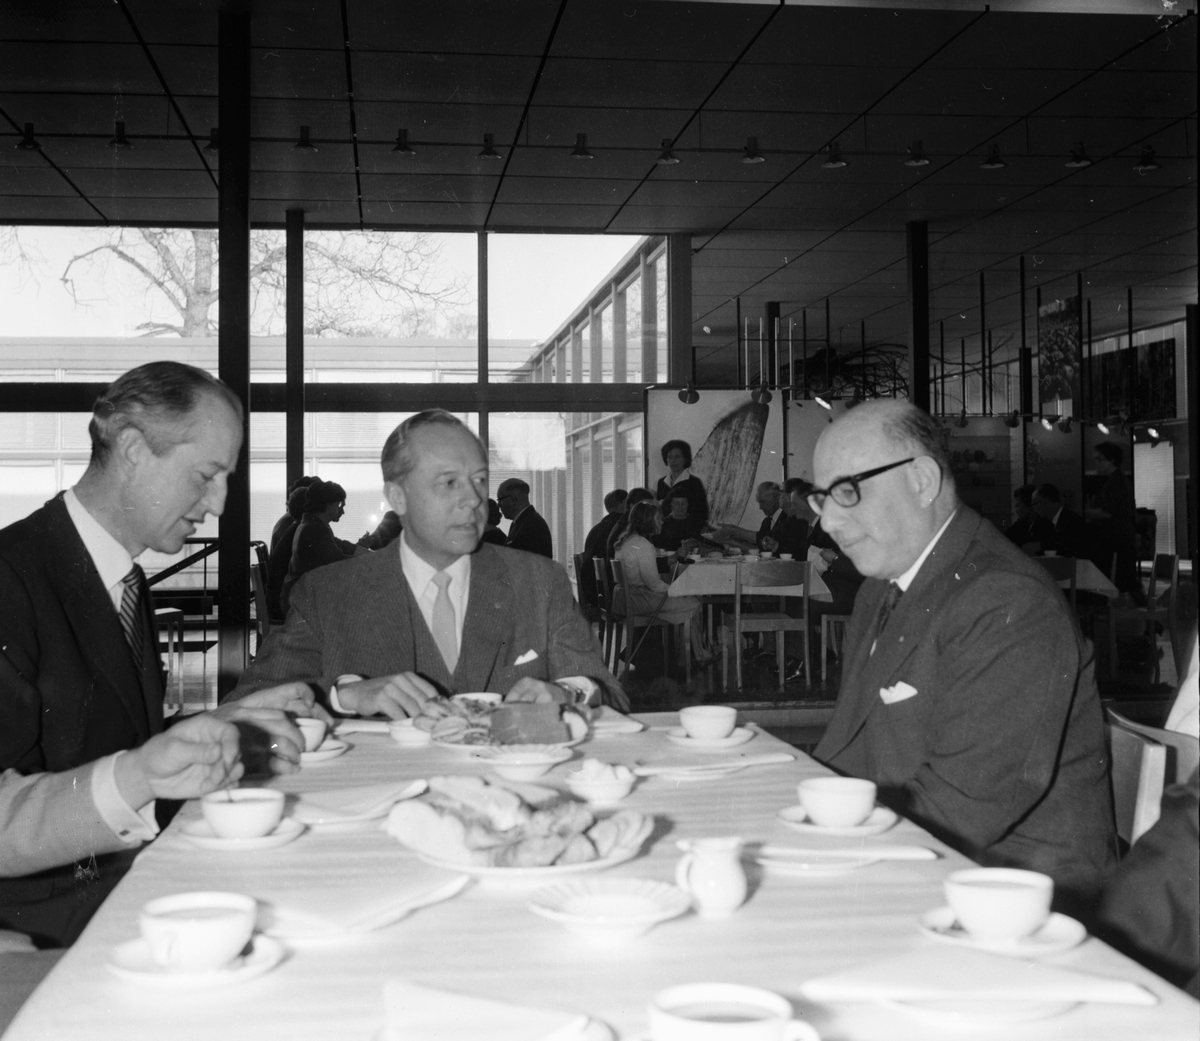 Polioförbundets årsmöte i Gävle.
14/5-1965